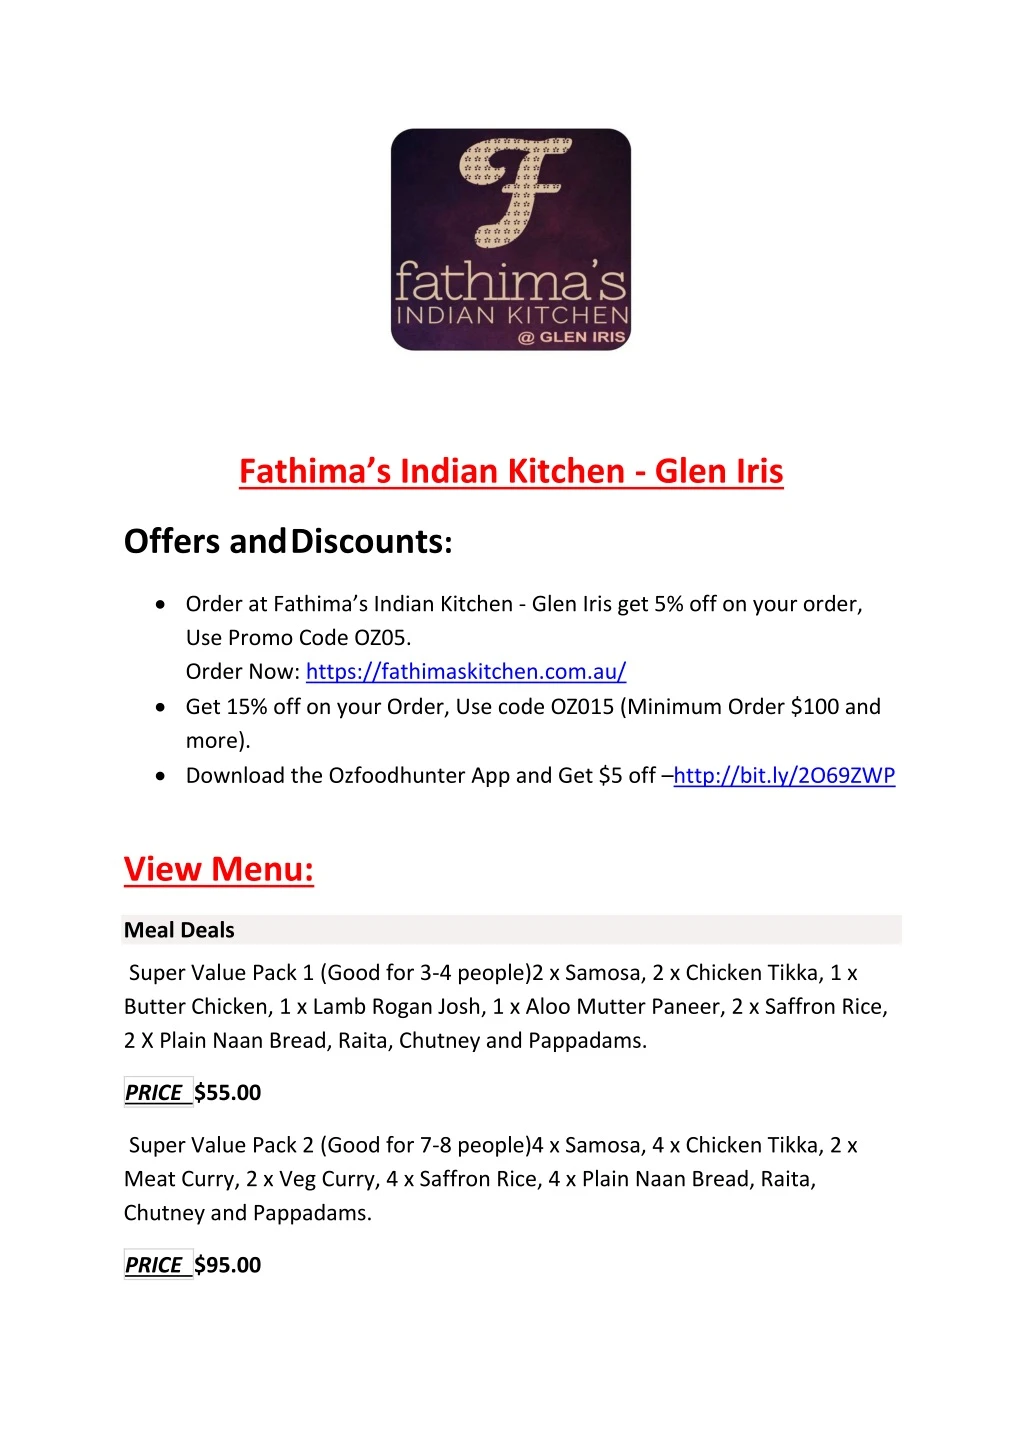 fathima s indian kitchen glen iris